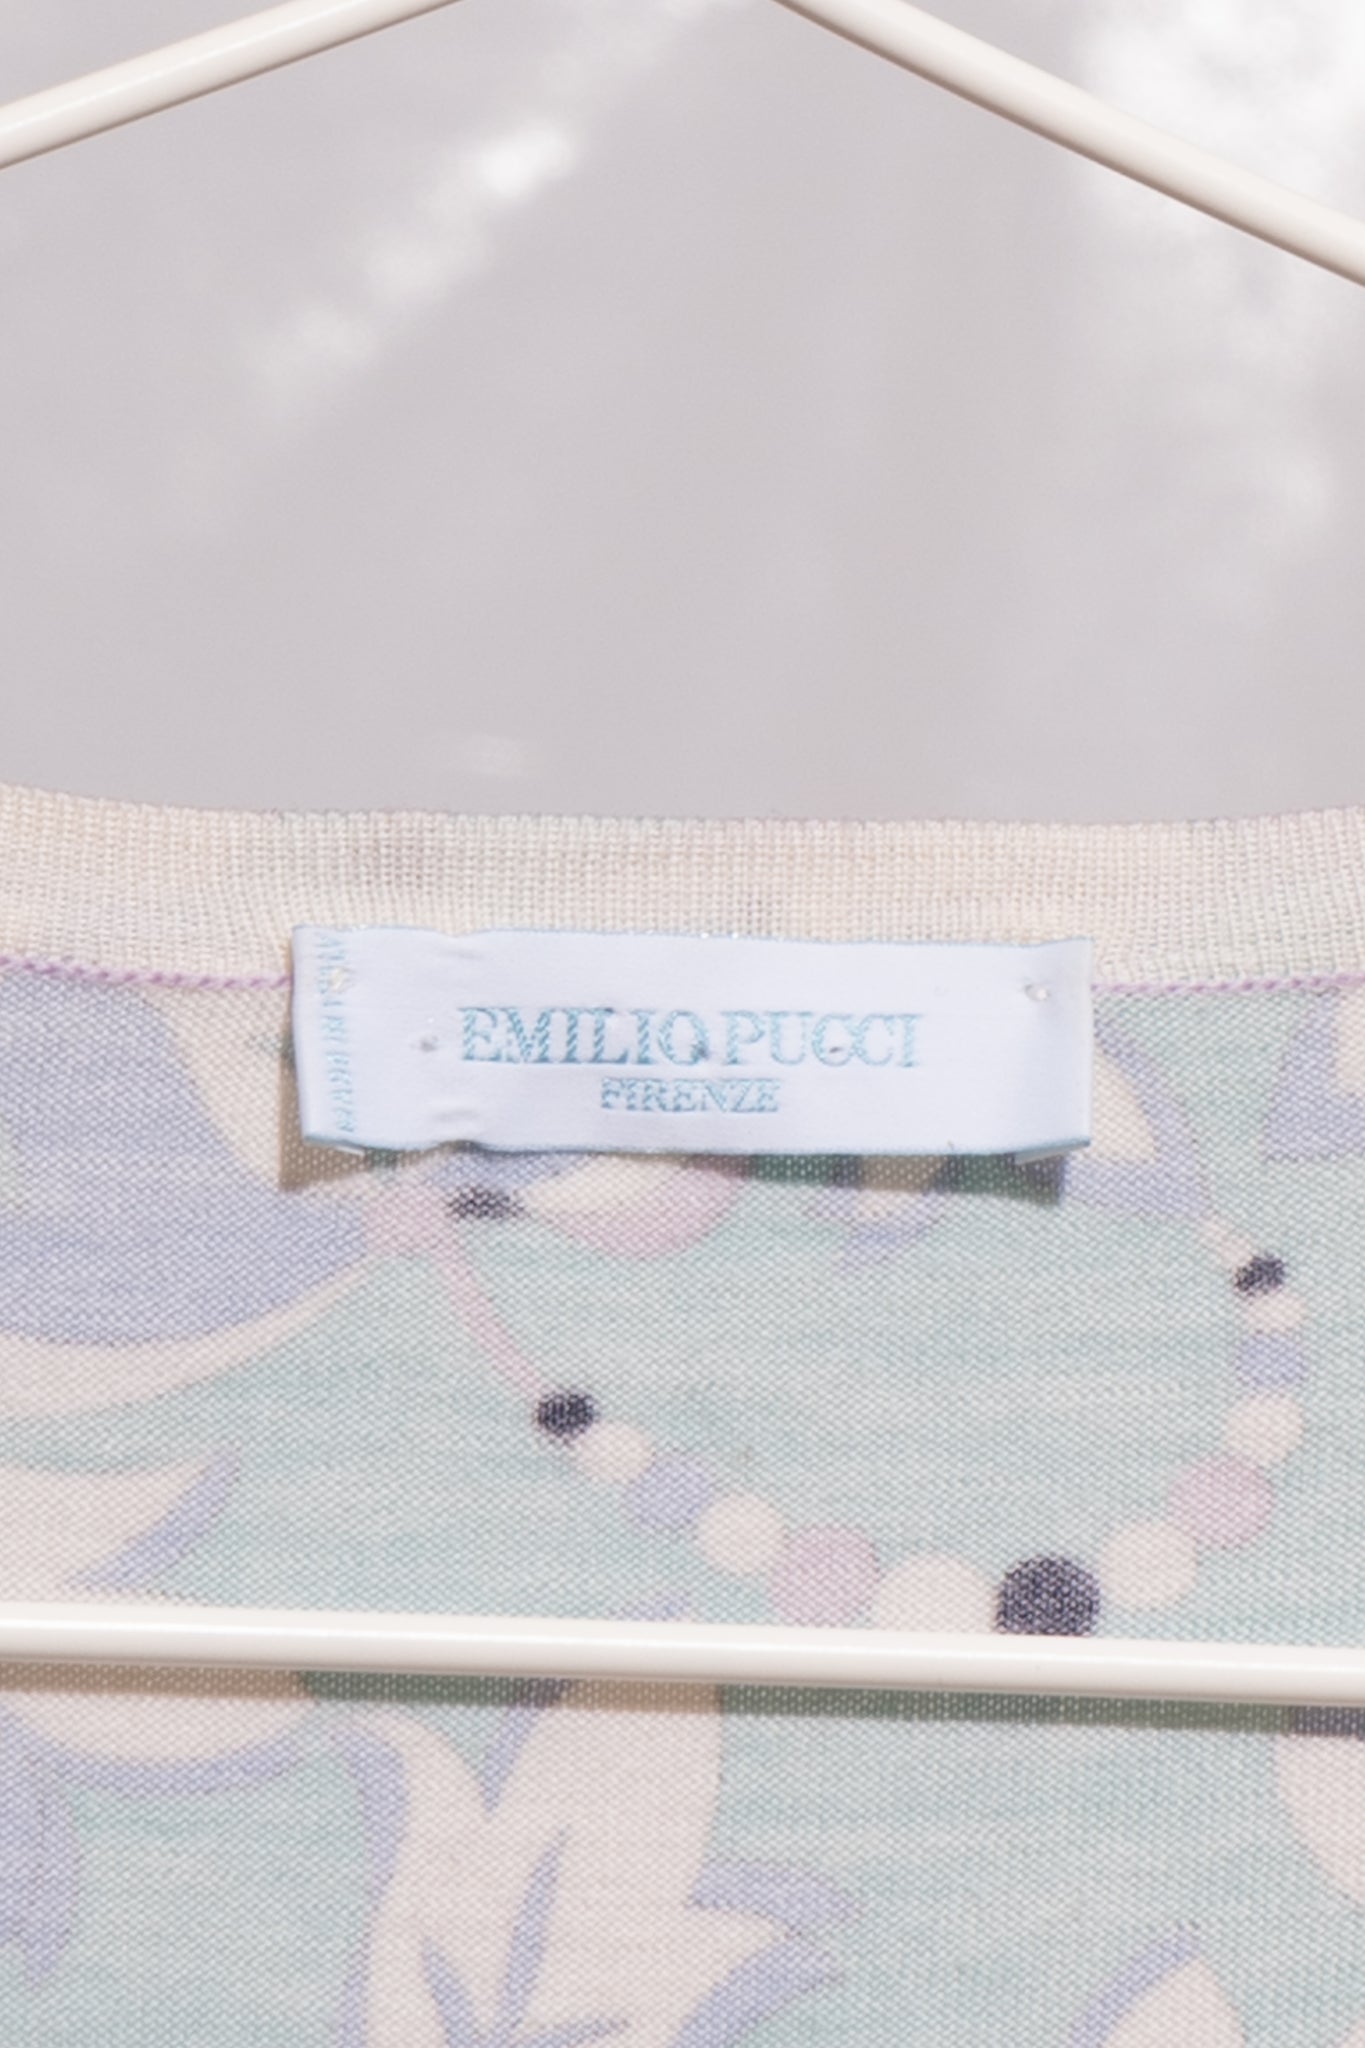 Emilio PUCCI Pure Wool Knit (S-M)